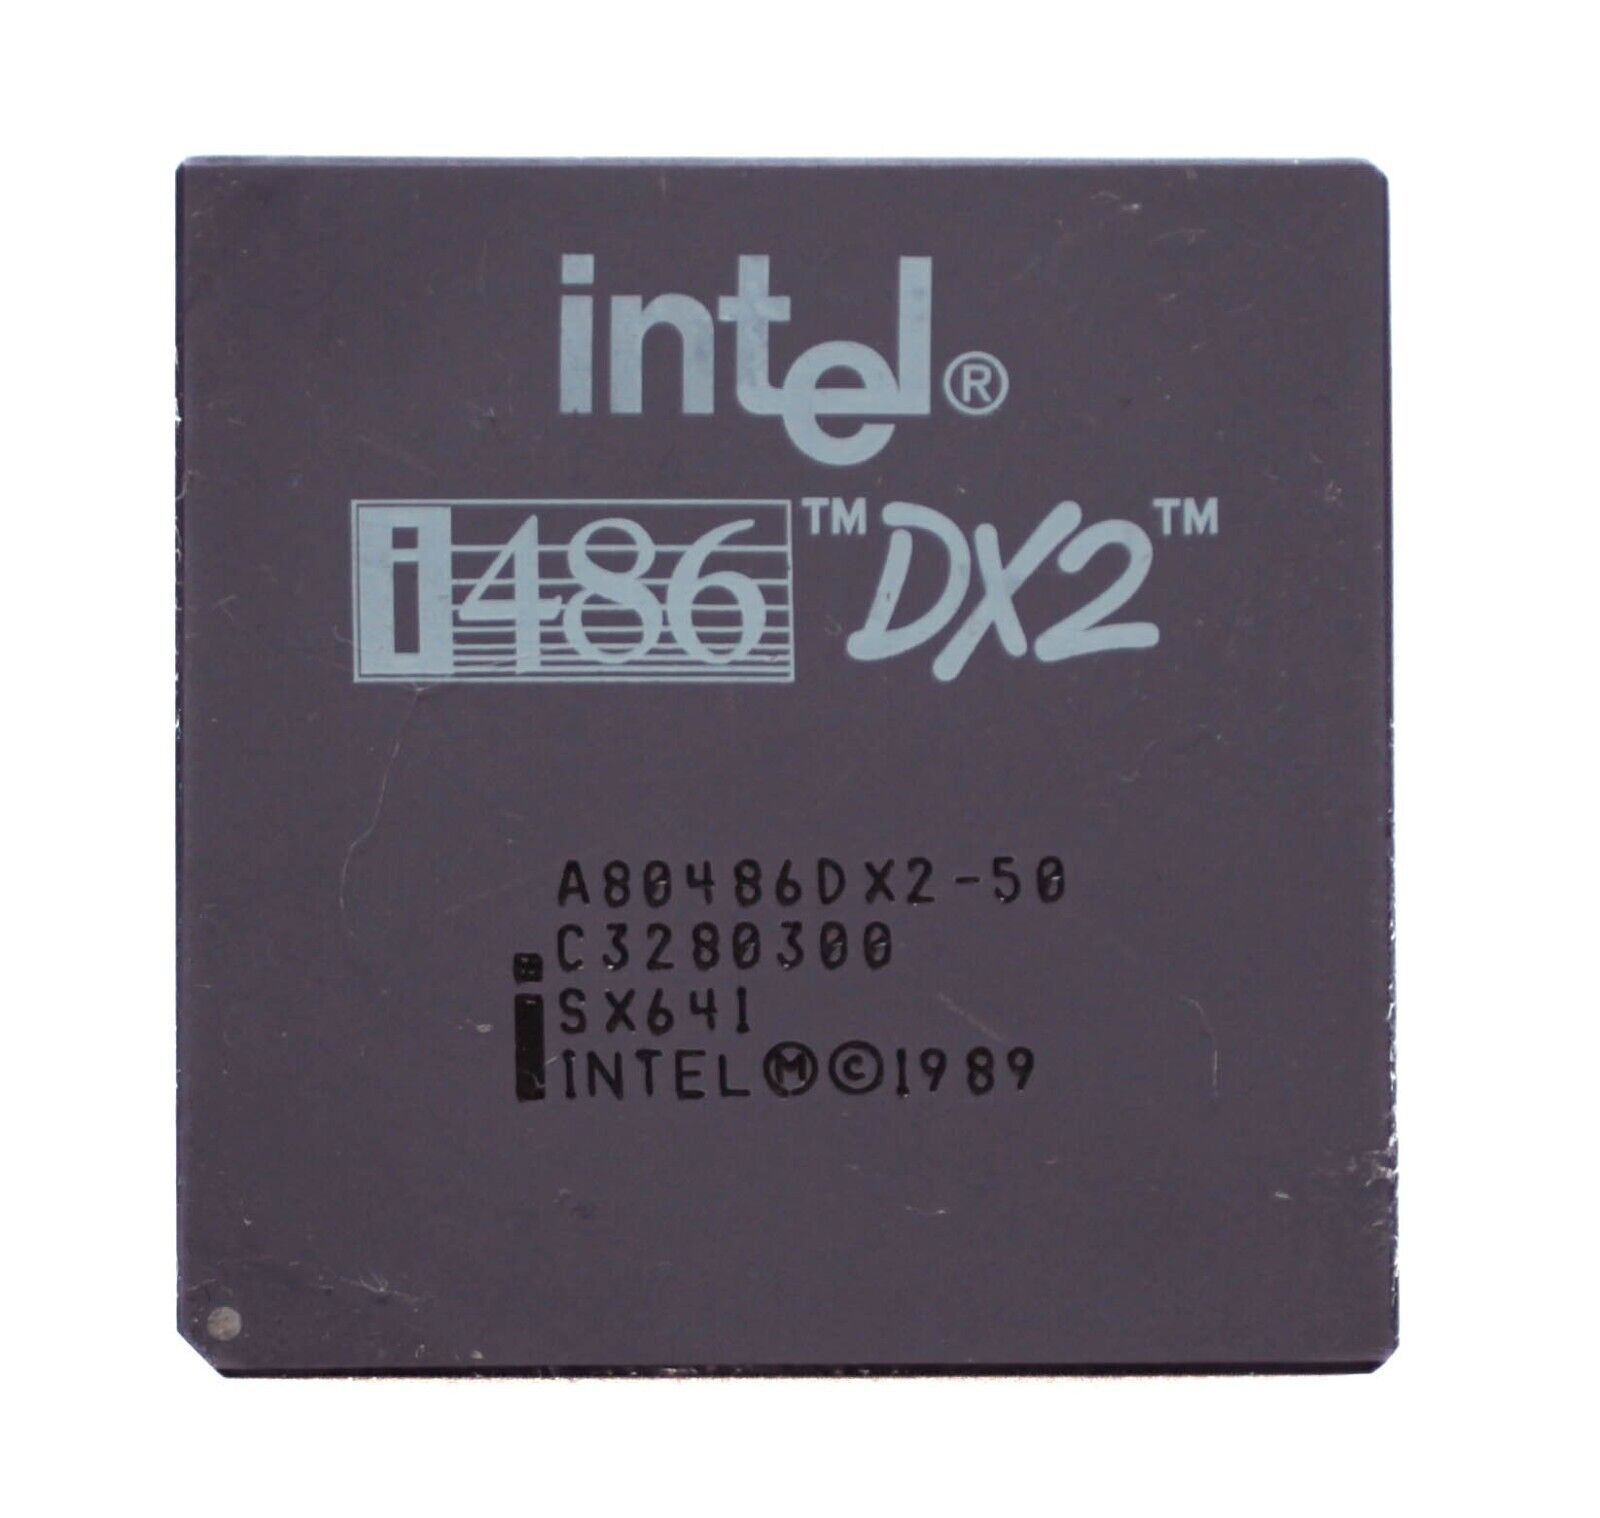 Socket 1 Processor - Intel 80486 DX2-50 - SX641 - 80486 - TESTED